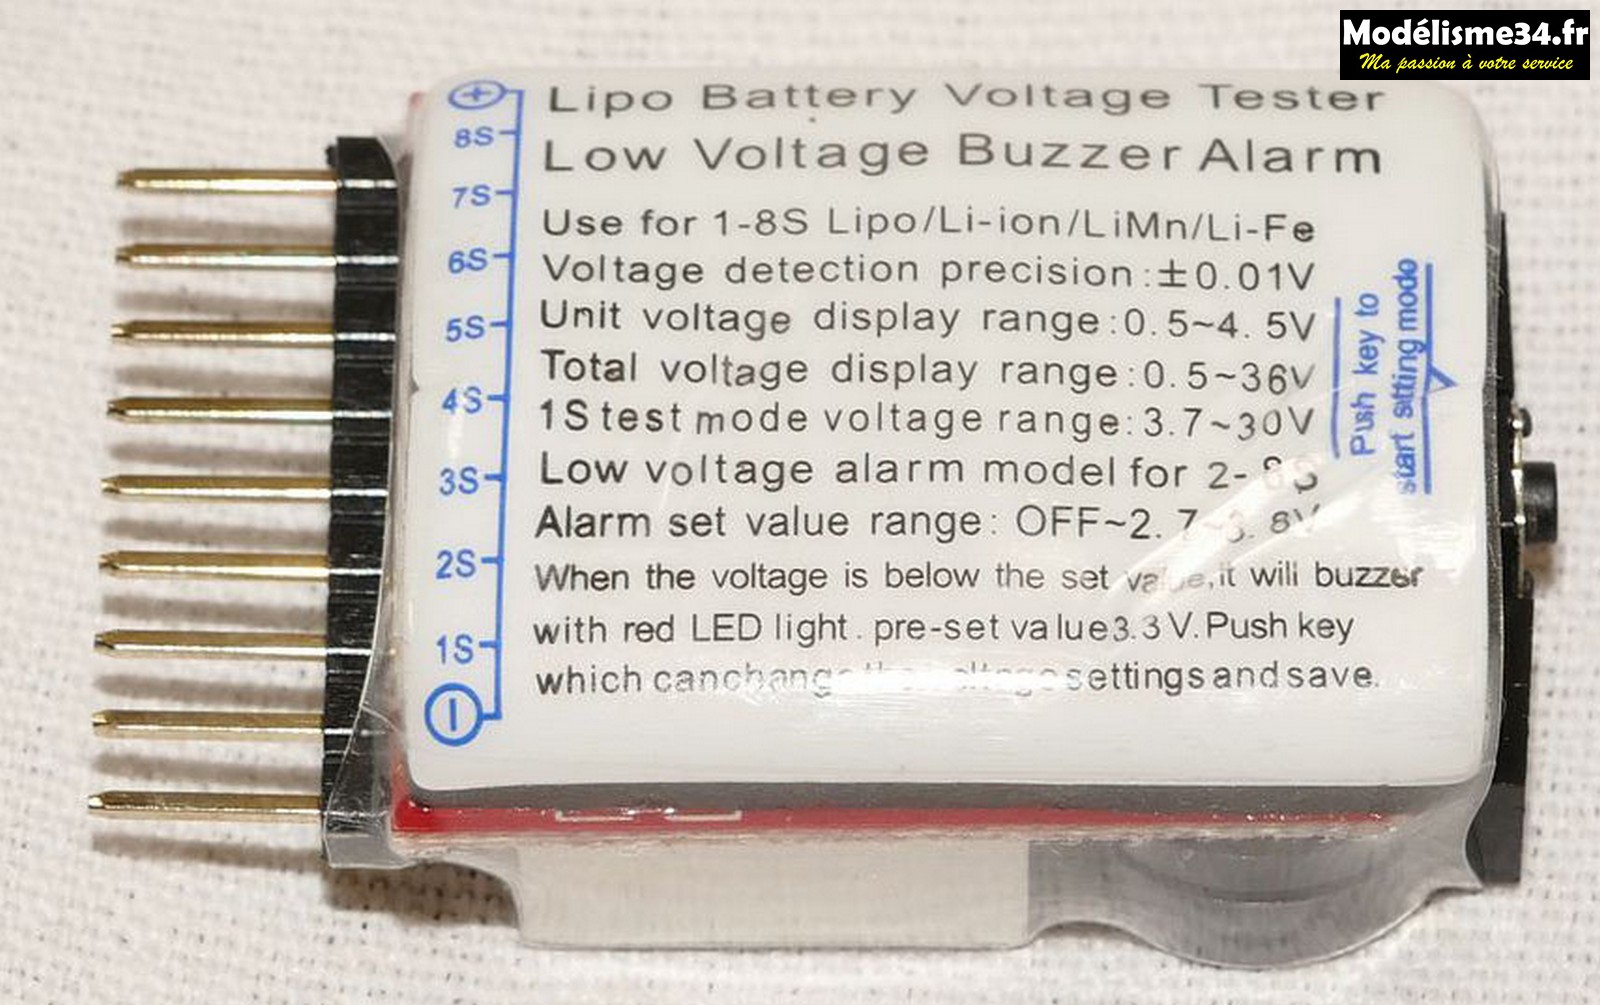 Alarme Buzzer Lipo/Li-ion indicateur de basse tension : m1099